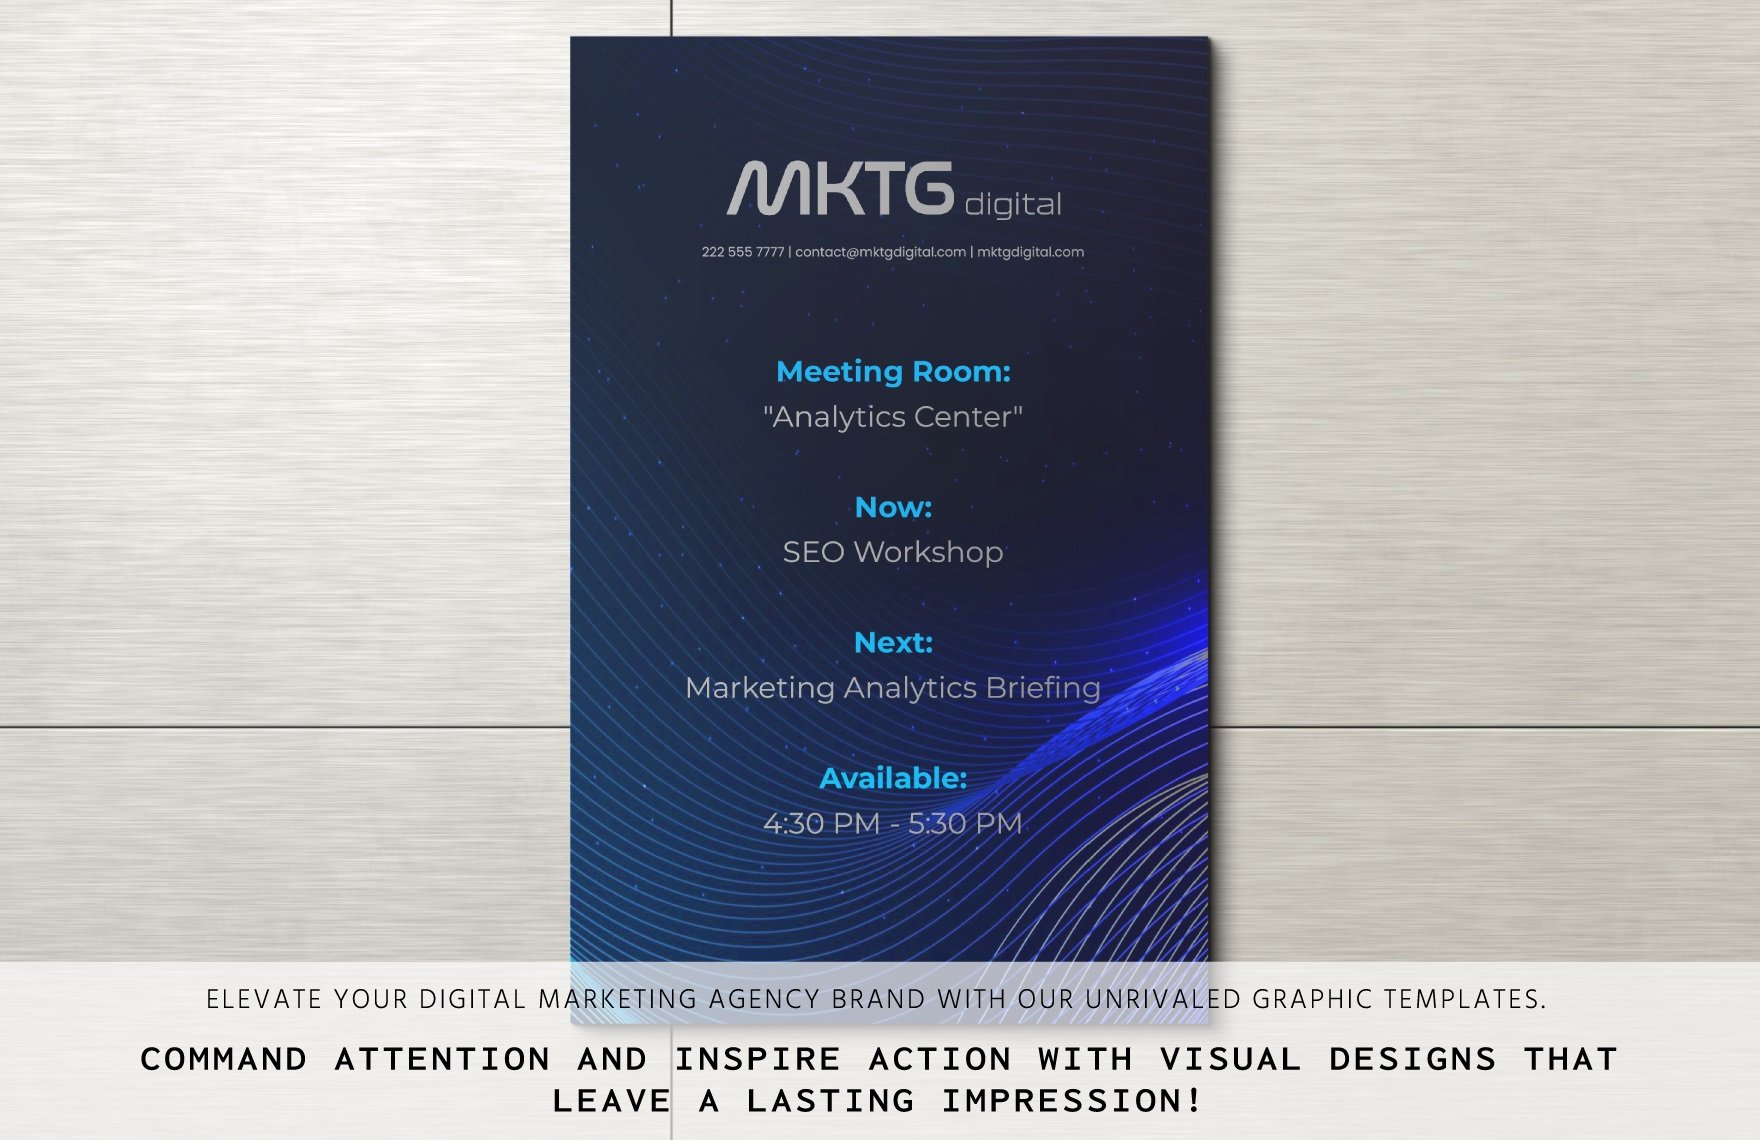 Digital Marketing Agency Meeting Room Signage Template